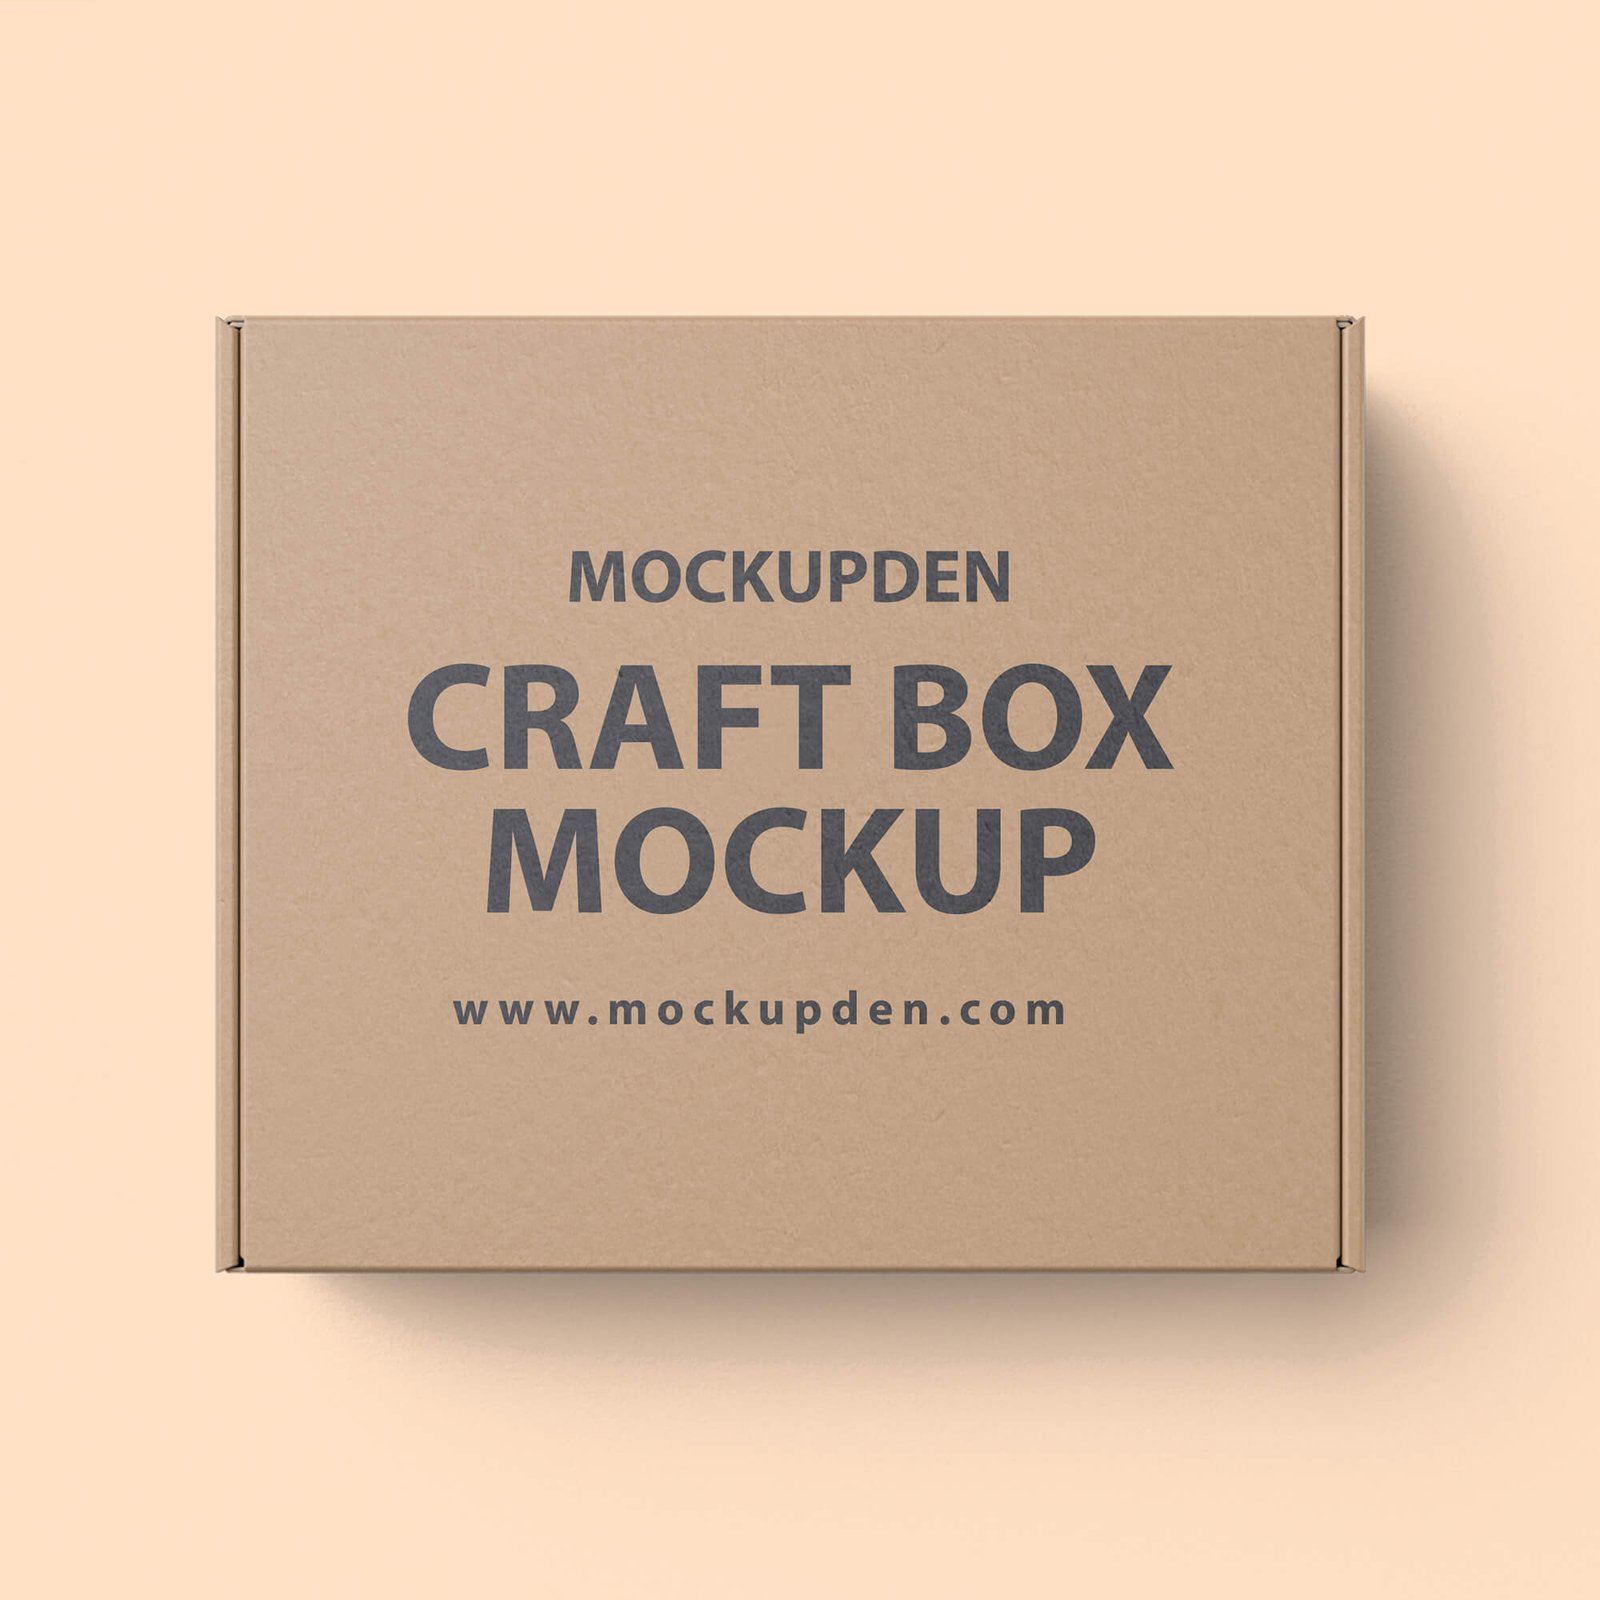 Design Free Craft Box Mockup PSD Template